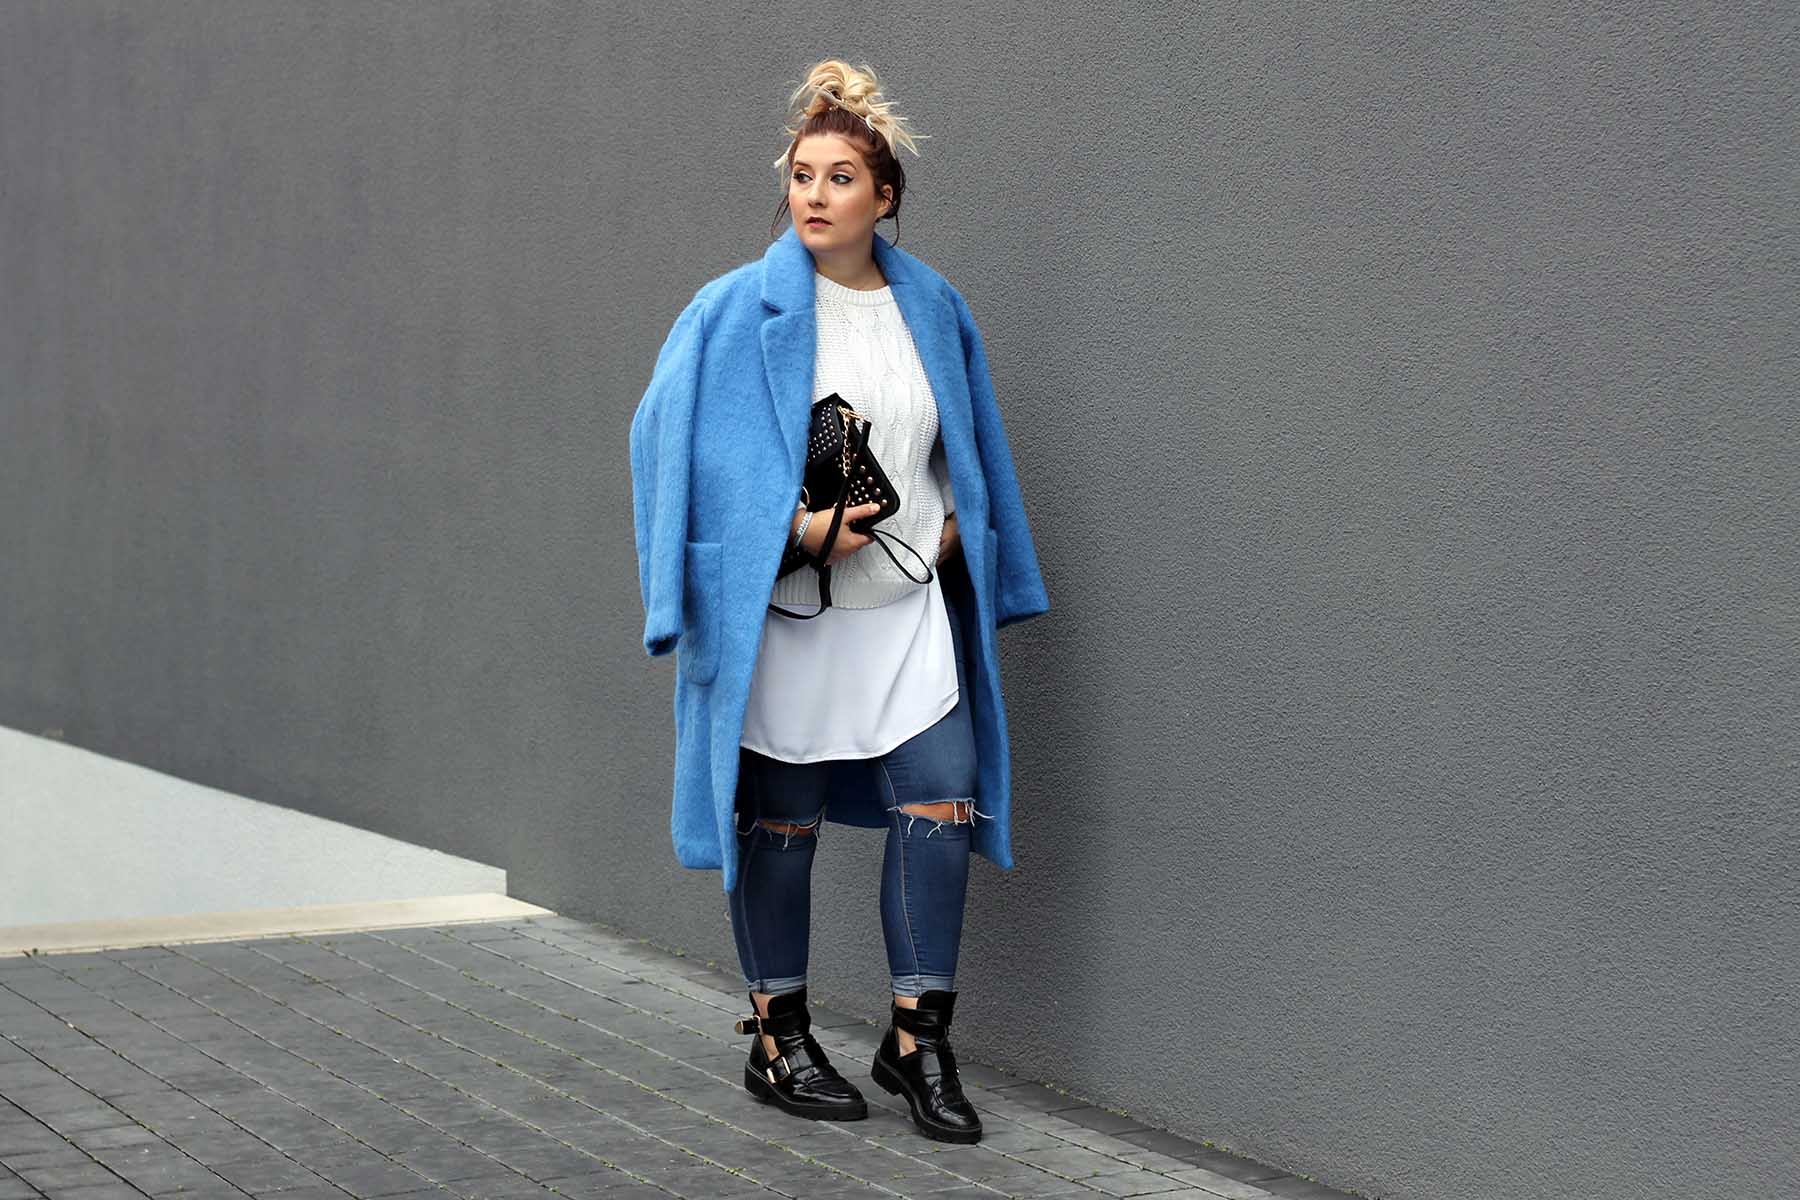 1outfit-look-style-modeblog-fashionblog-blauer-mantel-jeans-balenciaga-lookalike-boots-chloe7